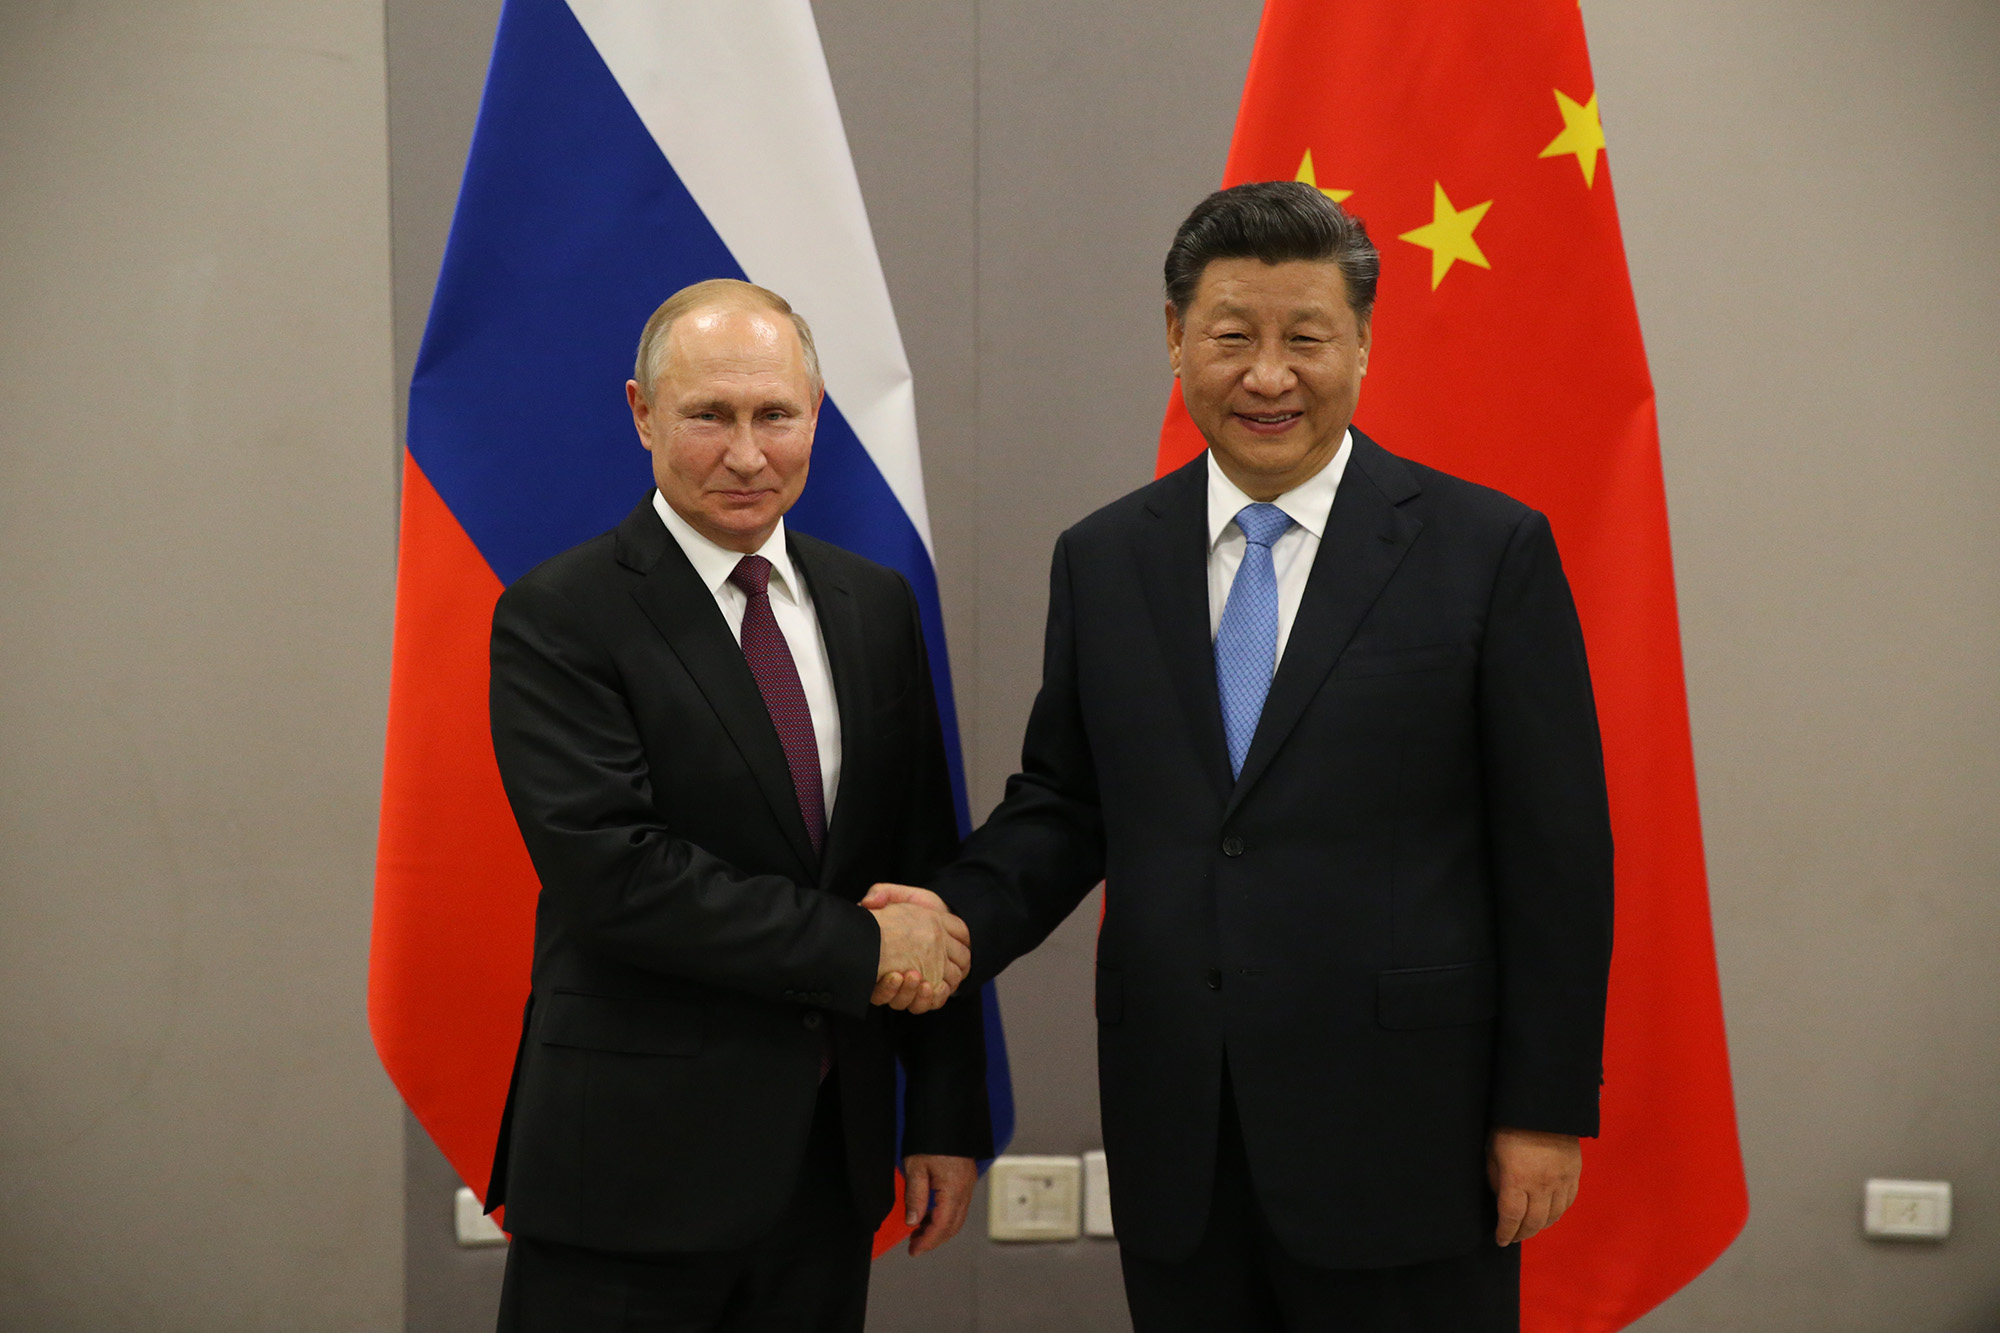 Russian President Vladimir Putin, left, greets Chinese President Xi Jinping, right, during their bilateral meeting on November 13, 2019 in Brasilia, Brazil. 